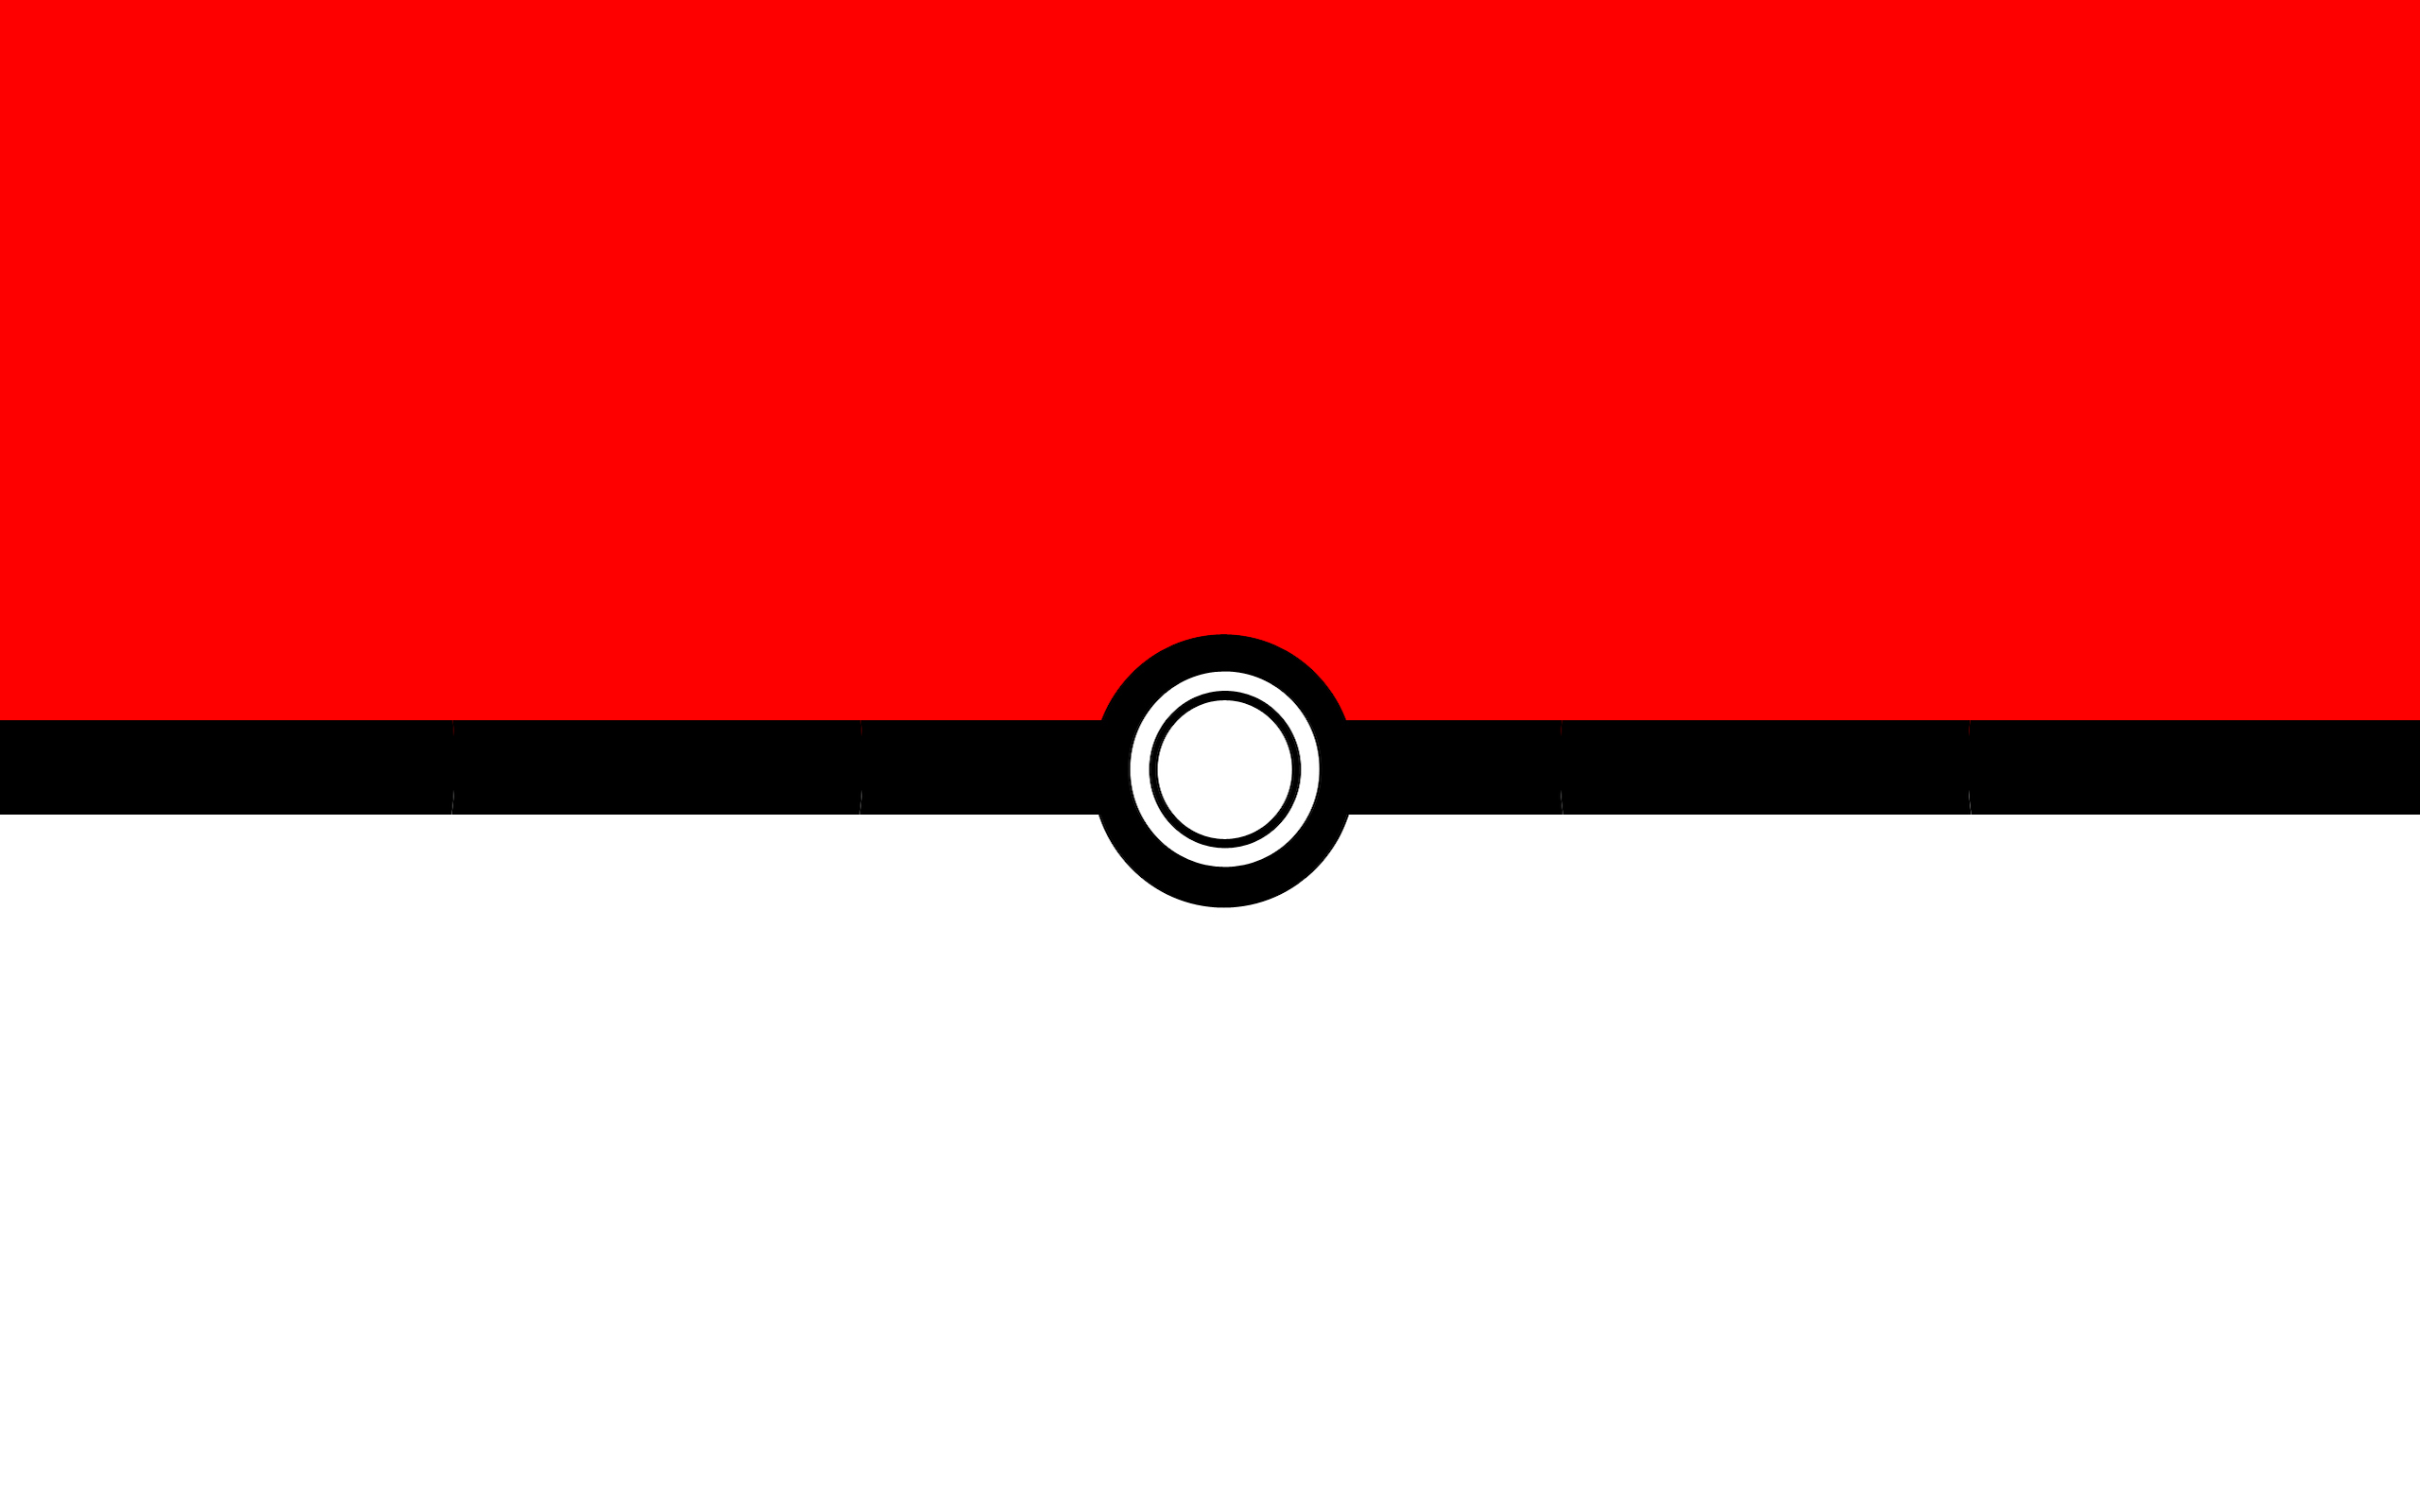 General 2560x1600 Pokémon Poke Ball minimalism digital art simple background